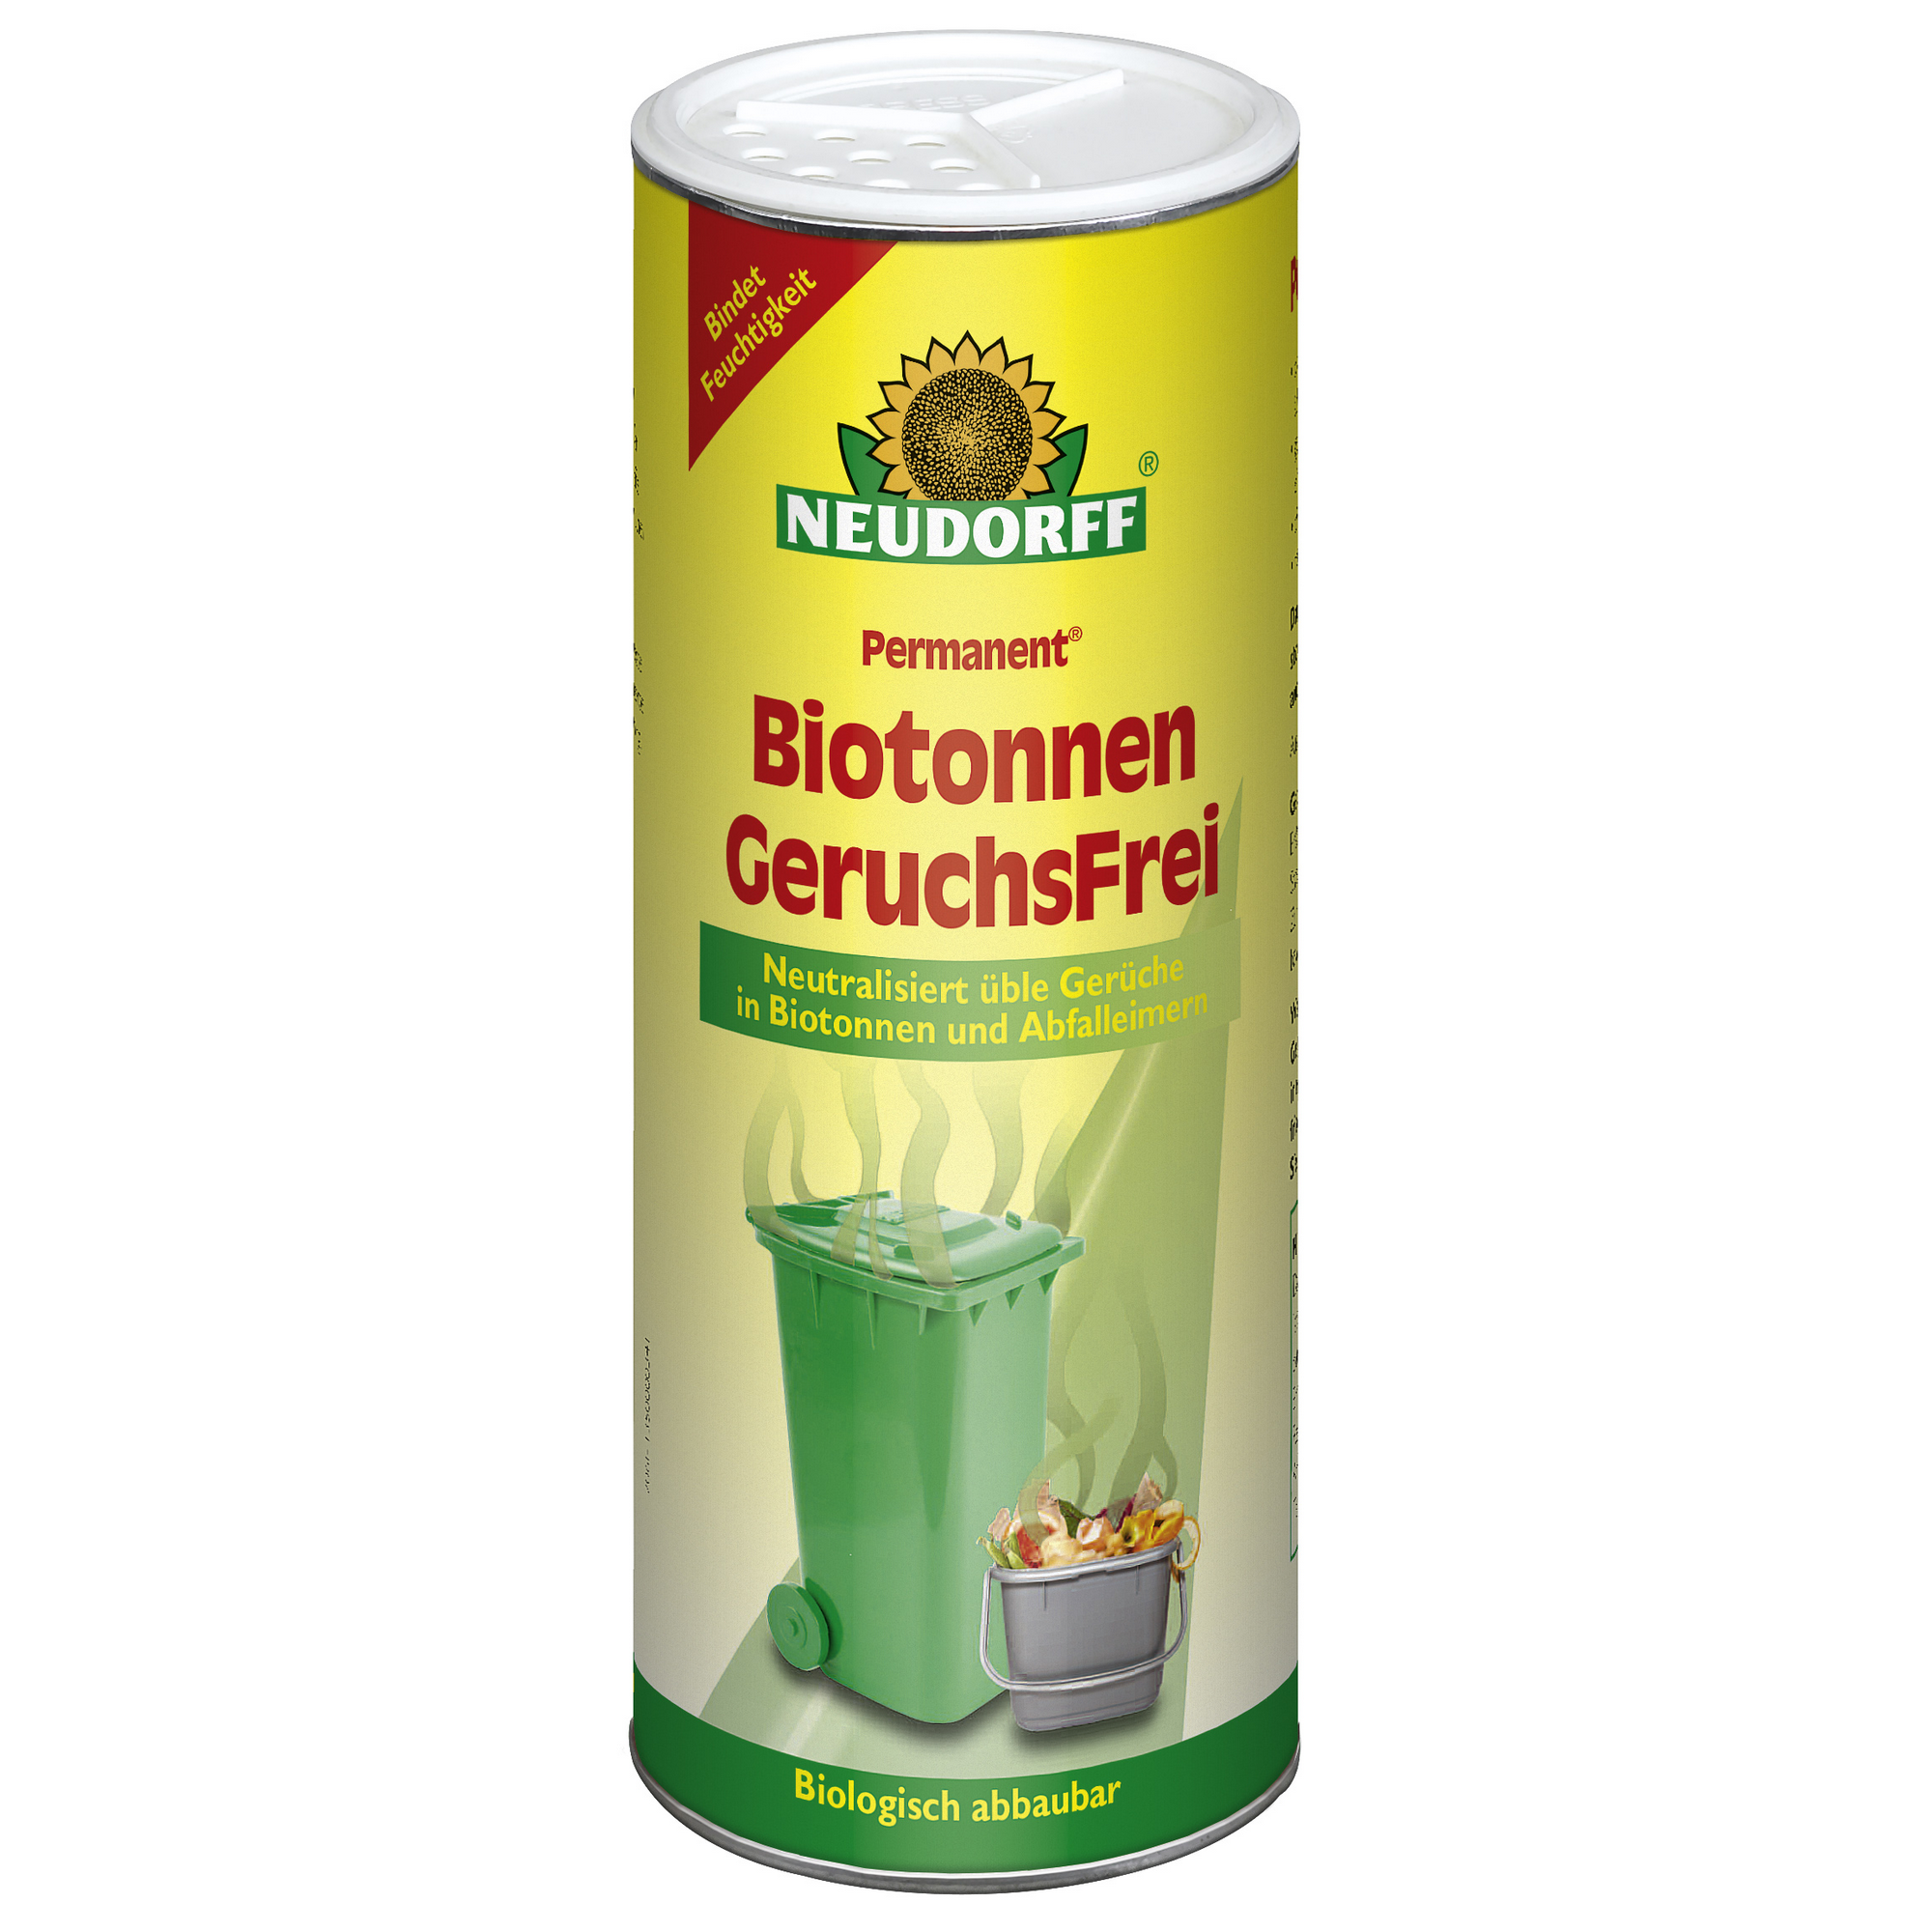 Permanent Biotonnen GeruchsFrei 500 g + product picture